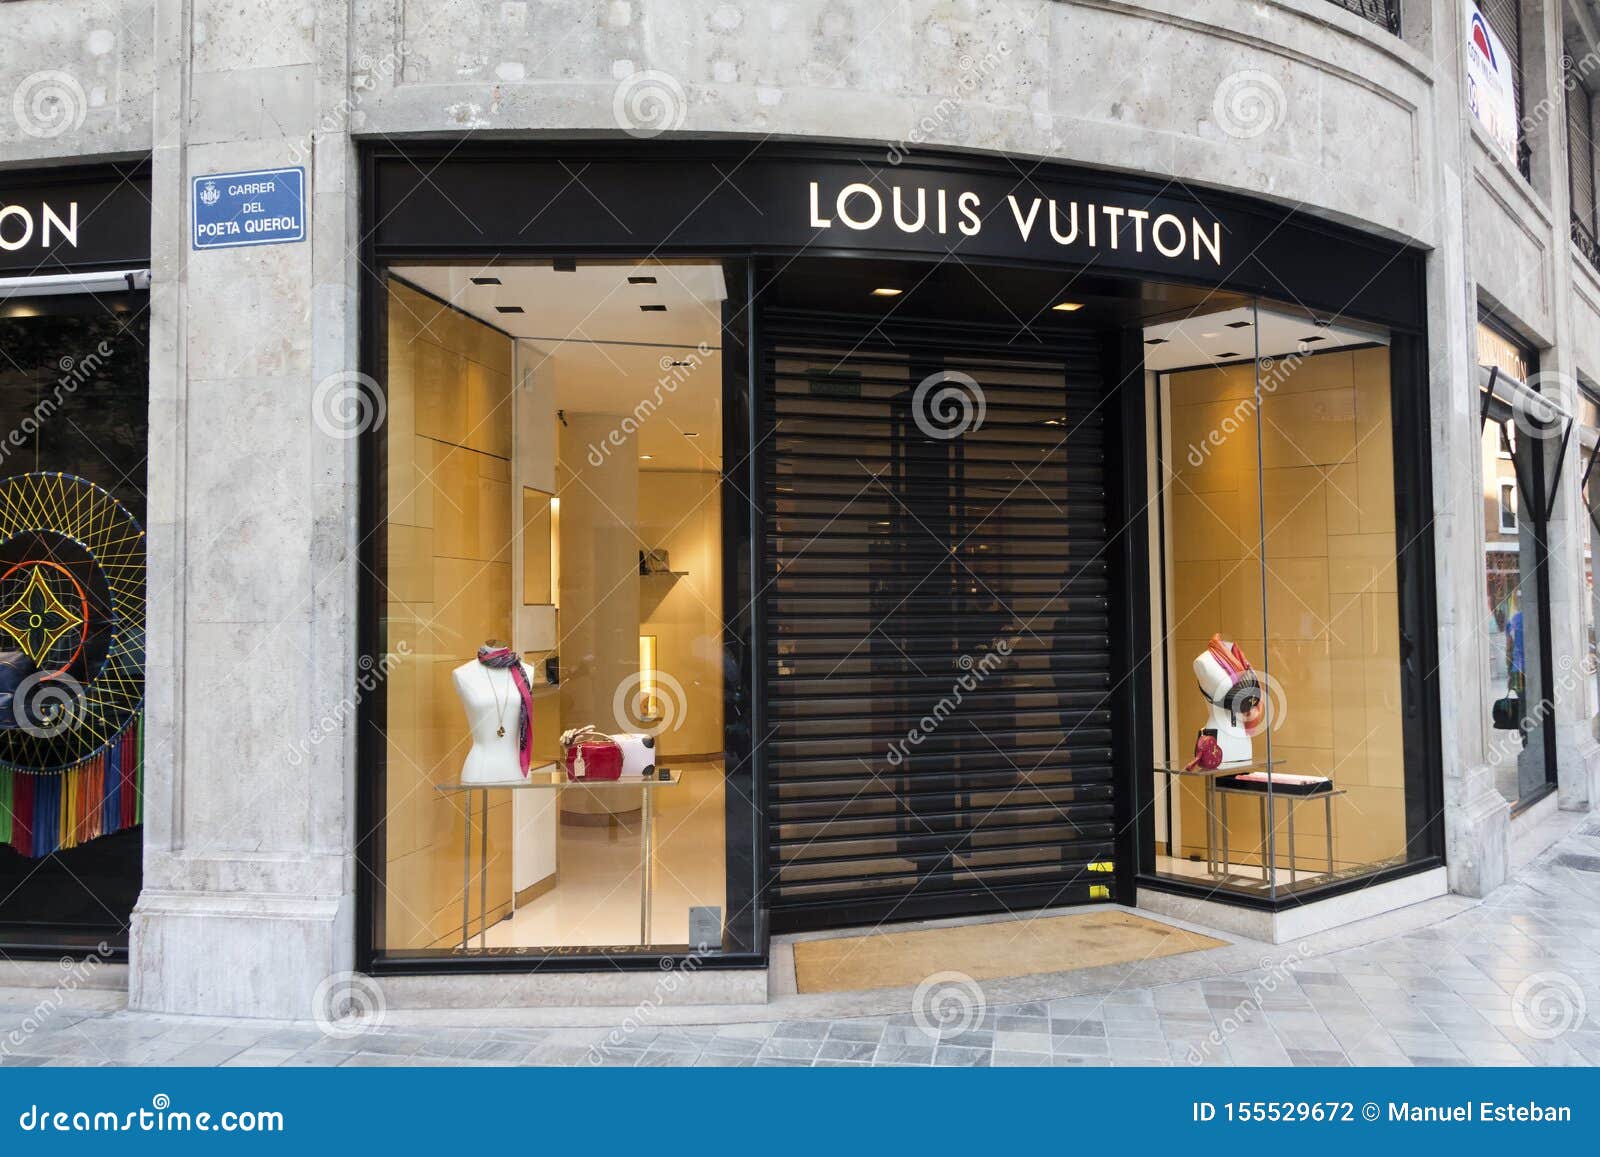 Louis Vuitton Store Facade in Valencia Editorial Photography of building, french: